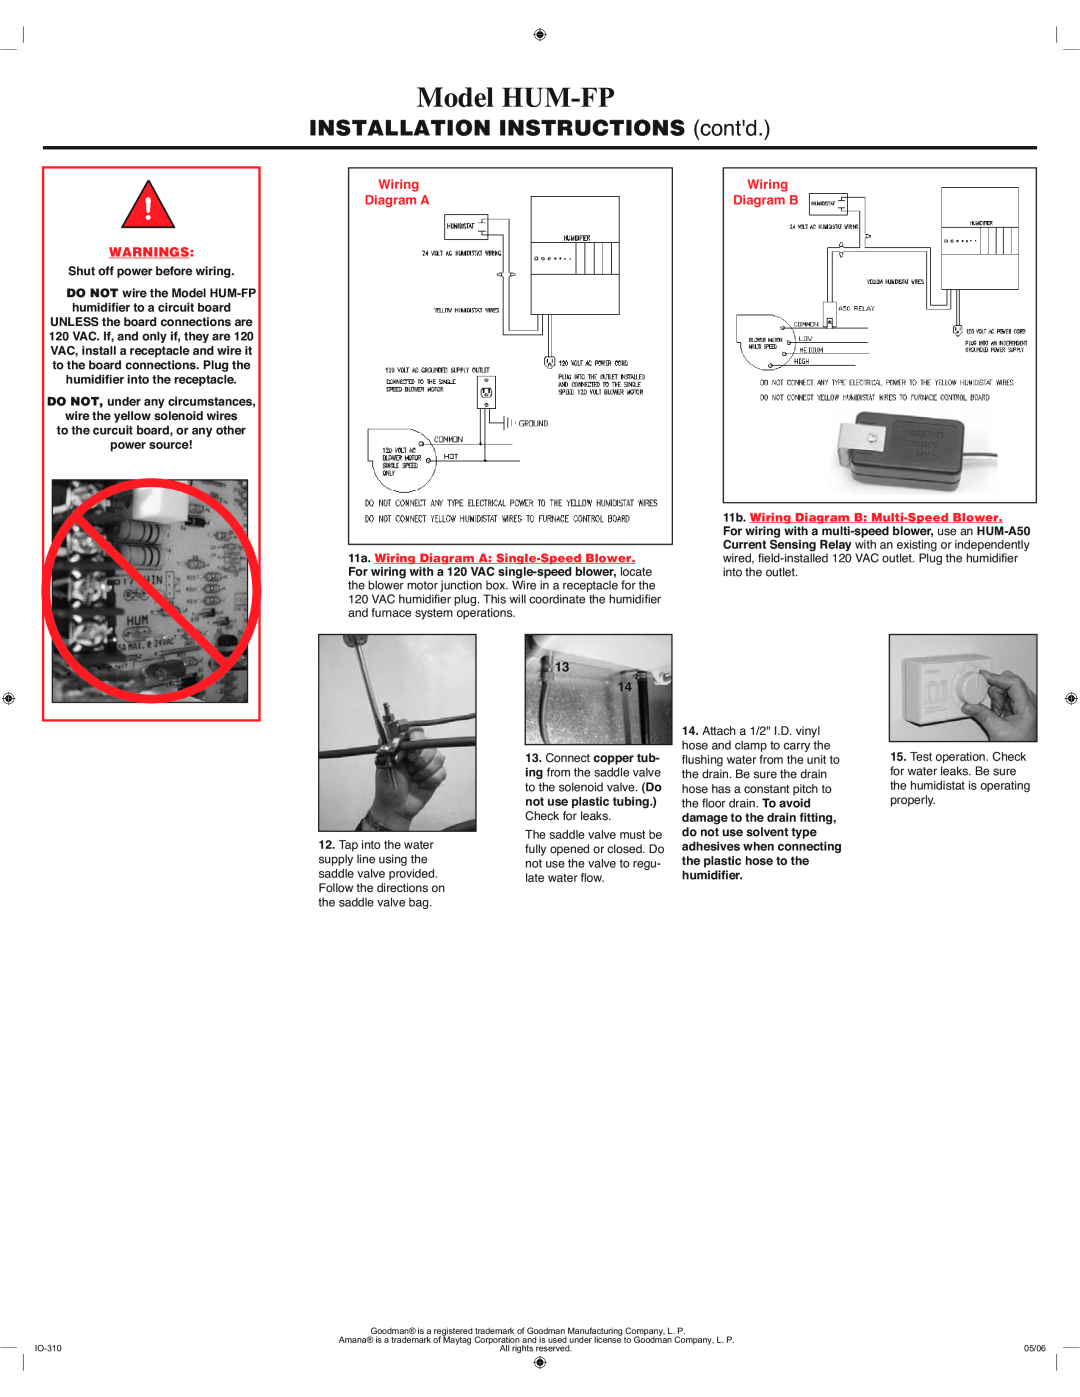 Goodman Mfg INSTALLATION INSTRUCTIONS contd, Warnings, Wiring Diagram A, Wiring Diagram B, Model HUM-FP, Kxplglàhu 